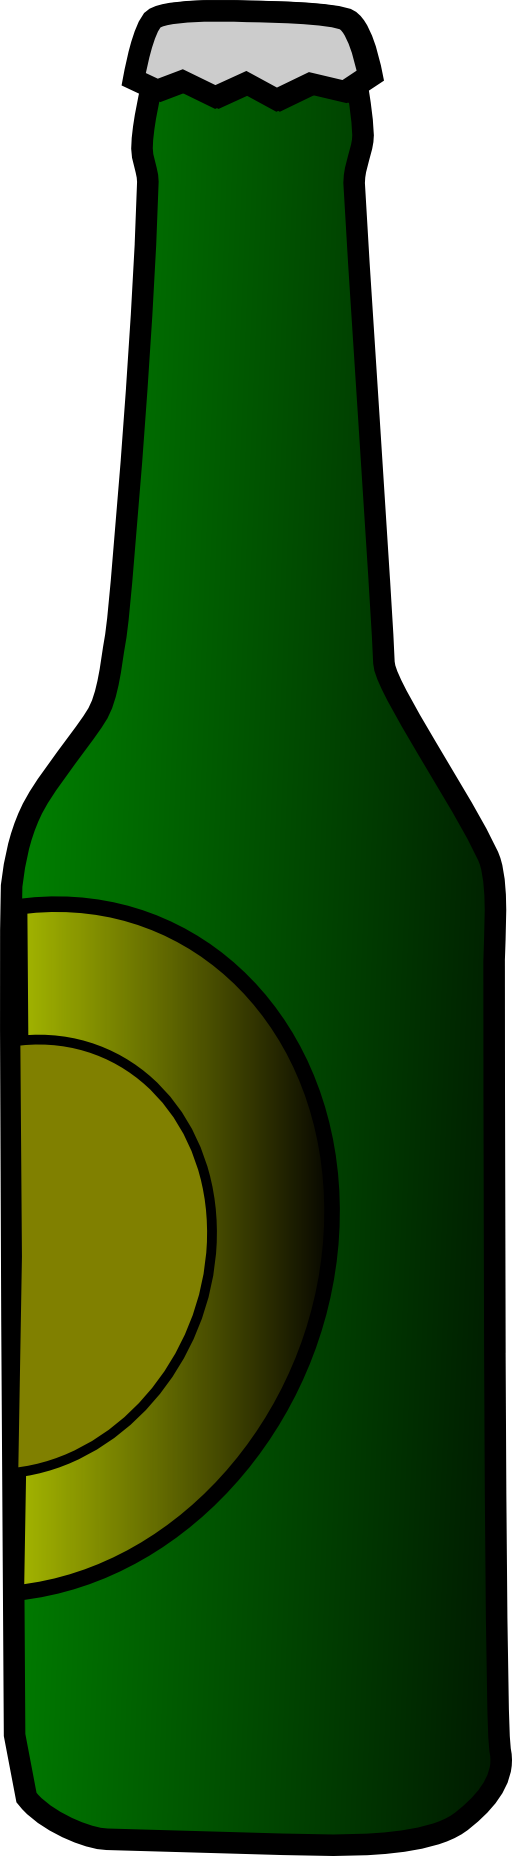 Clipart bottle 